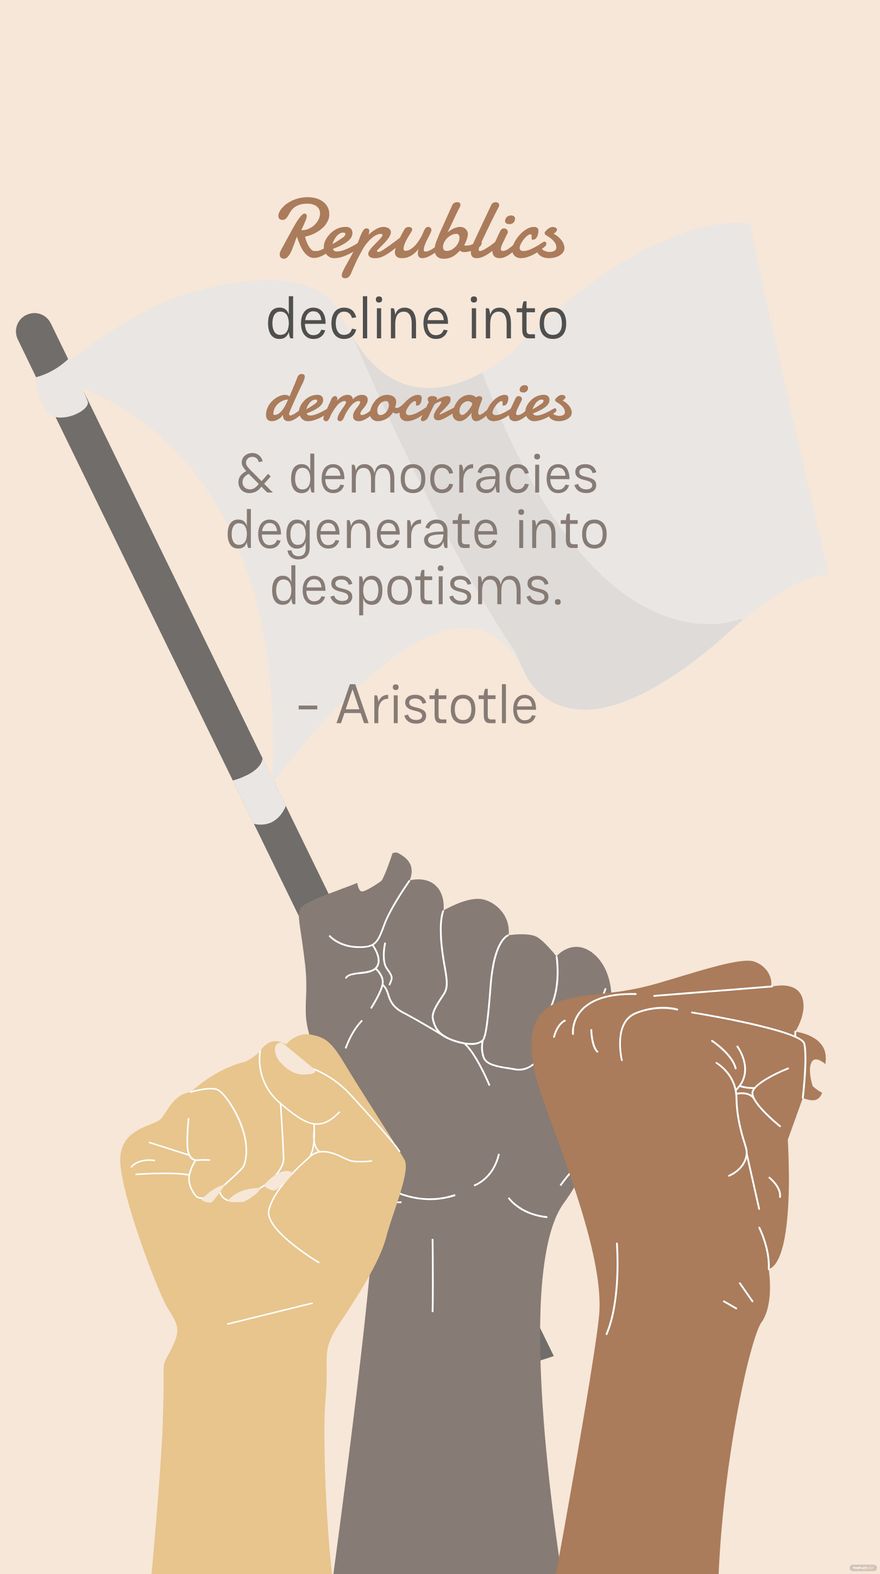 Free Republics decline into democracies and democracies degenerate into despotisms. - Aristotle